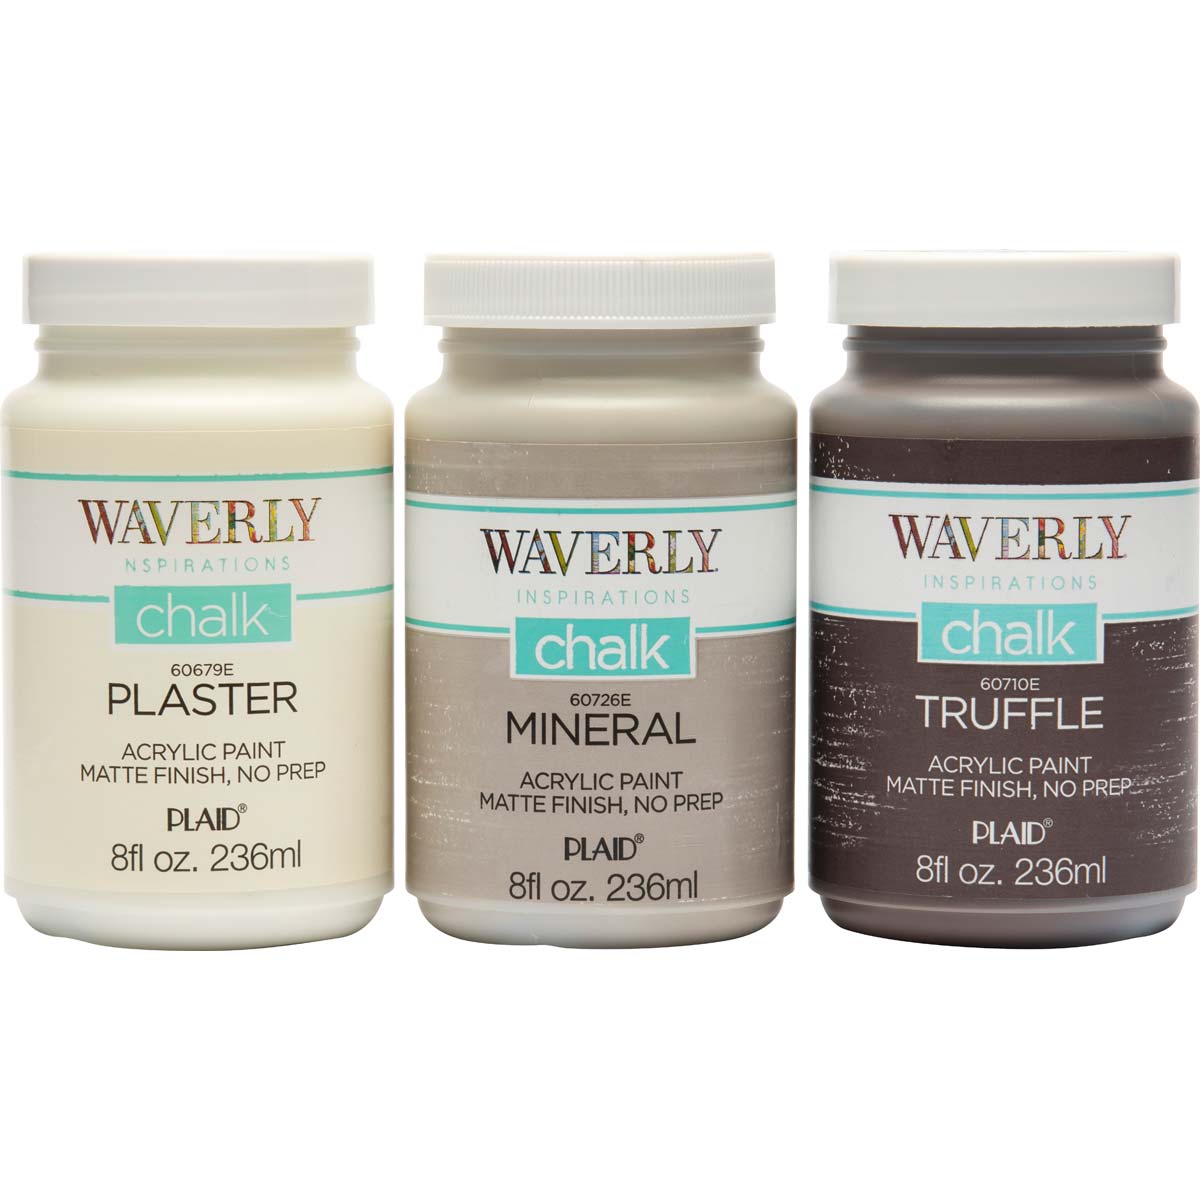 Waverly ® Inspirations Chalk Finish Acrylic Paint Set - Grays, 3 pc. - 13406